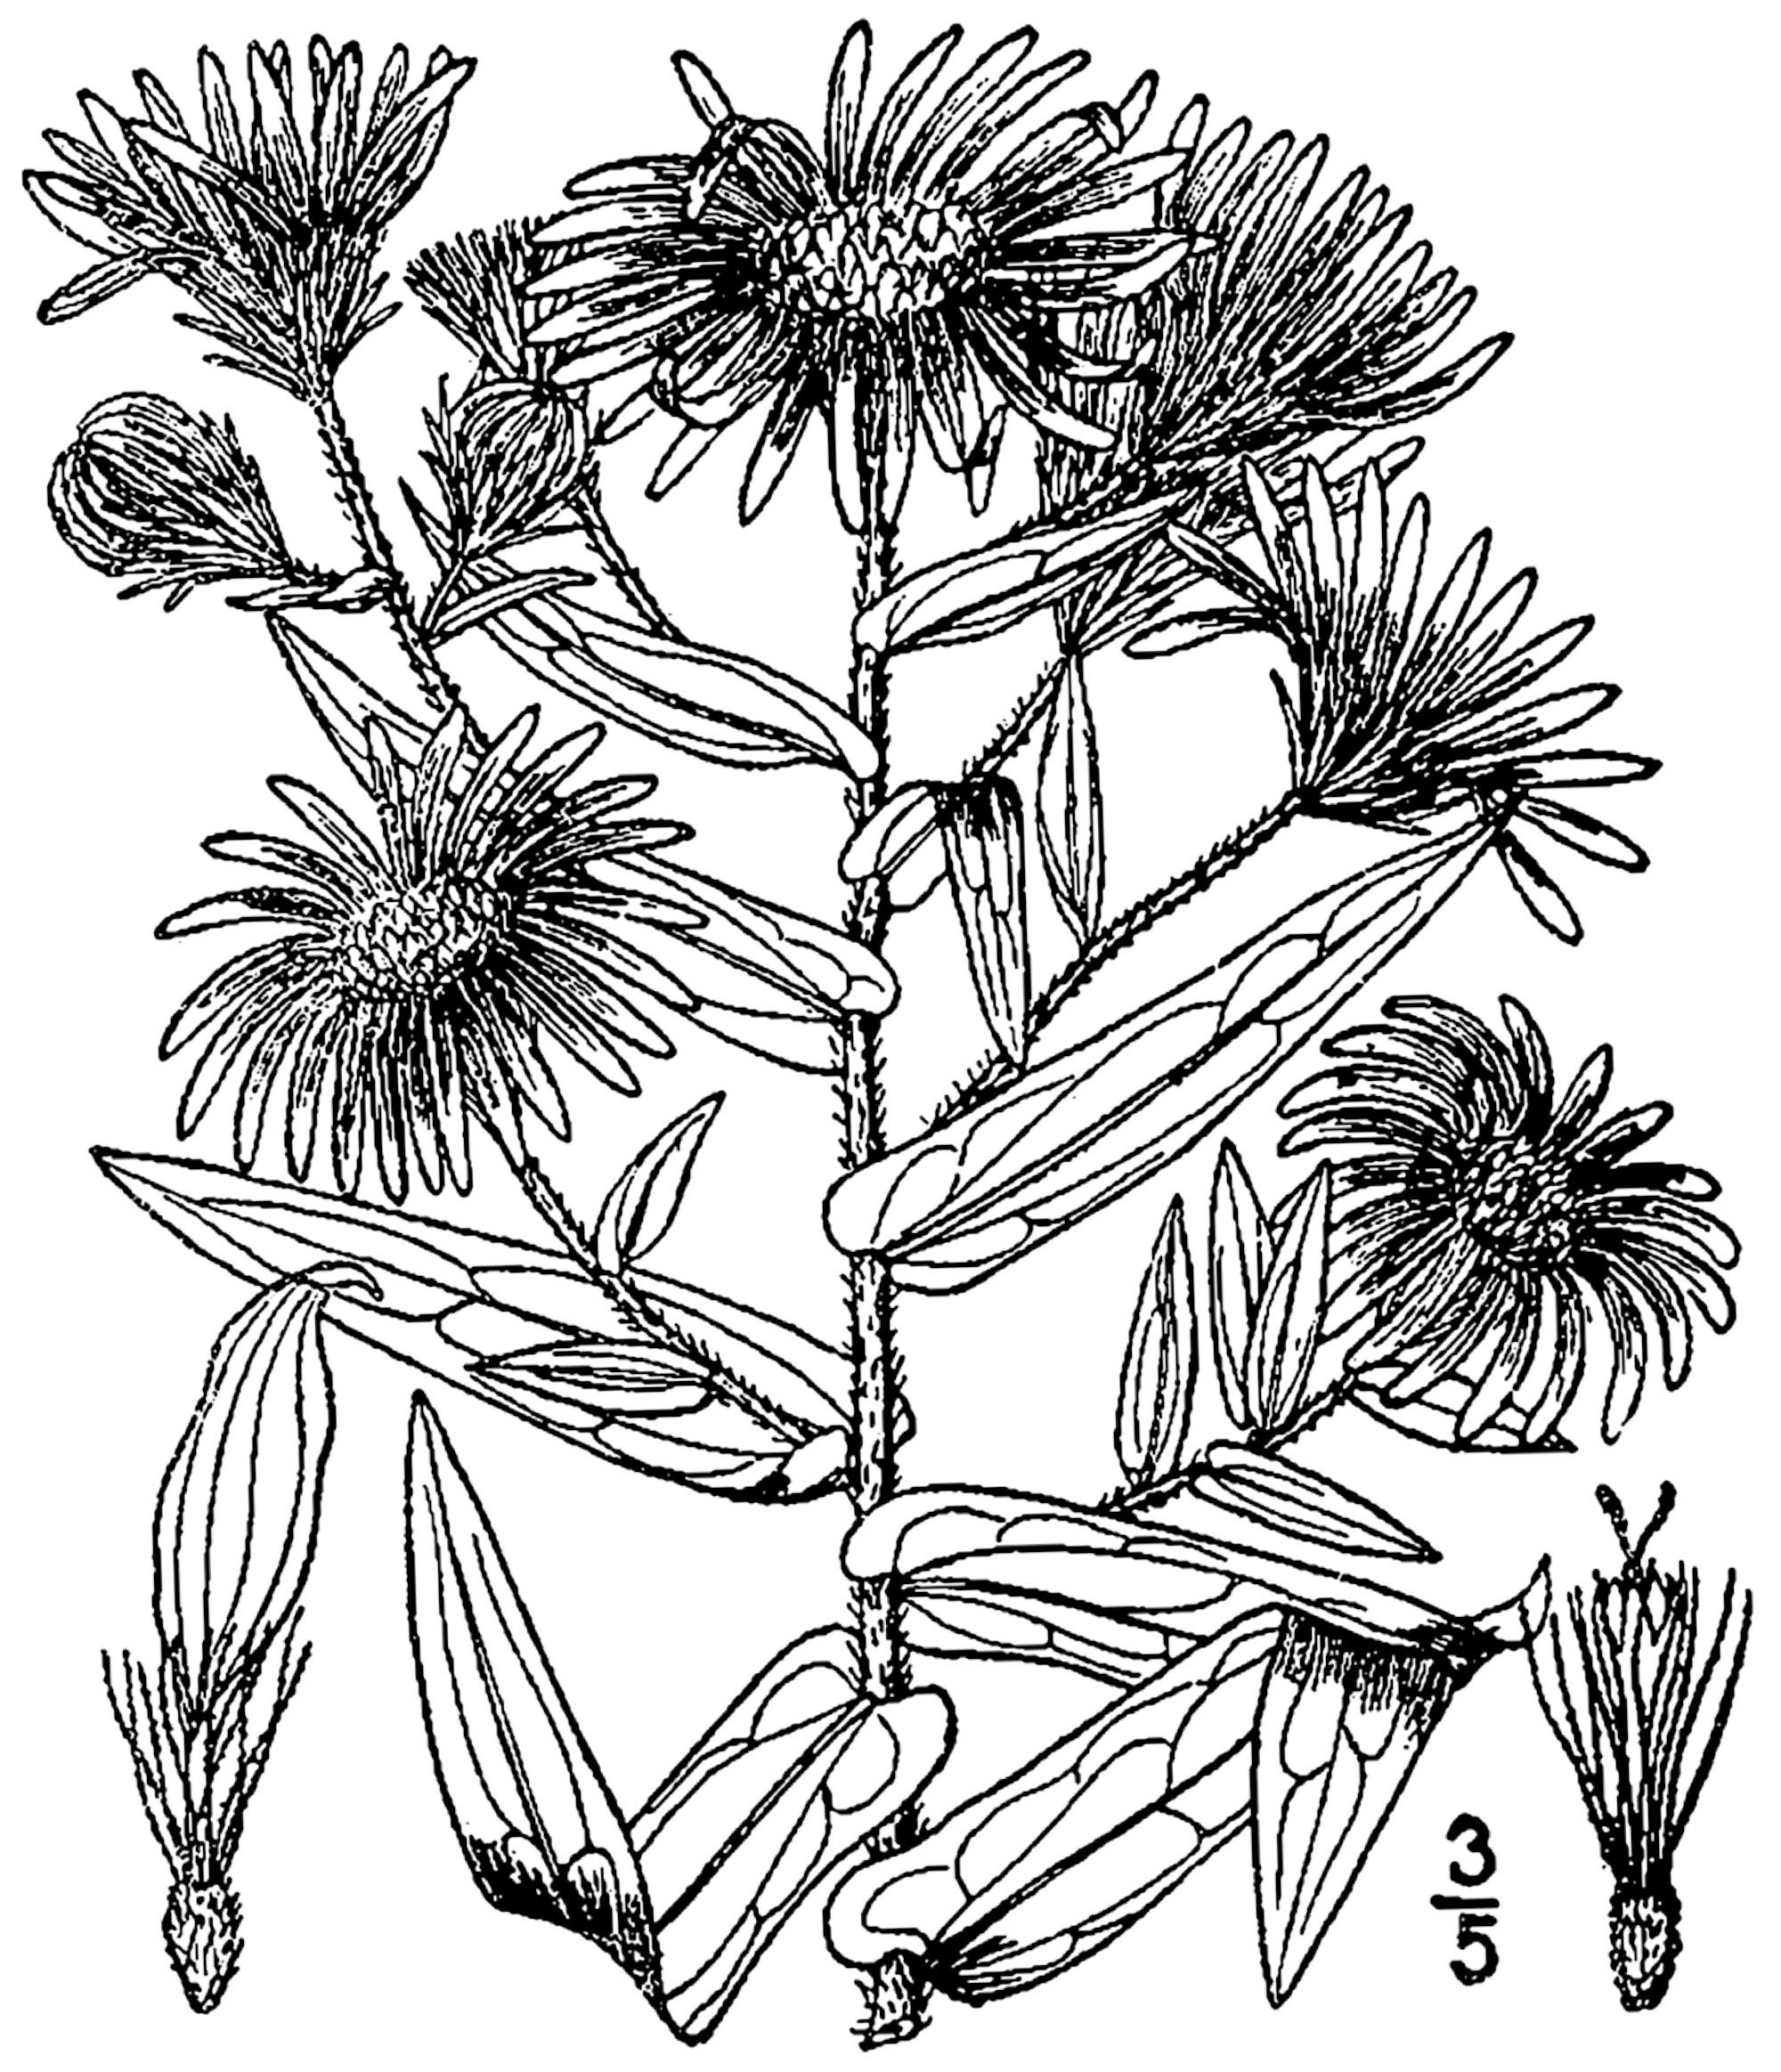 1913 illustration of New England Aster (Symphyotrichum novae-angliae).